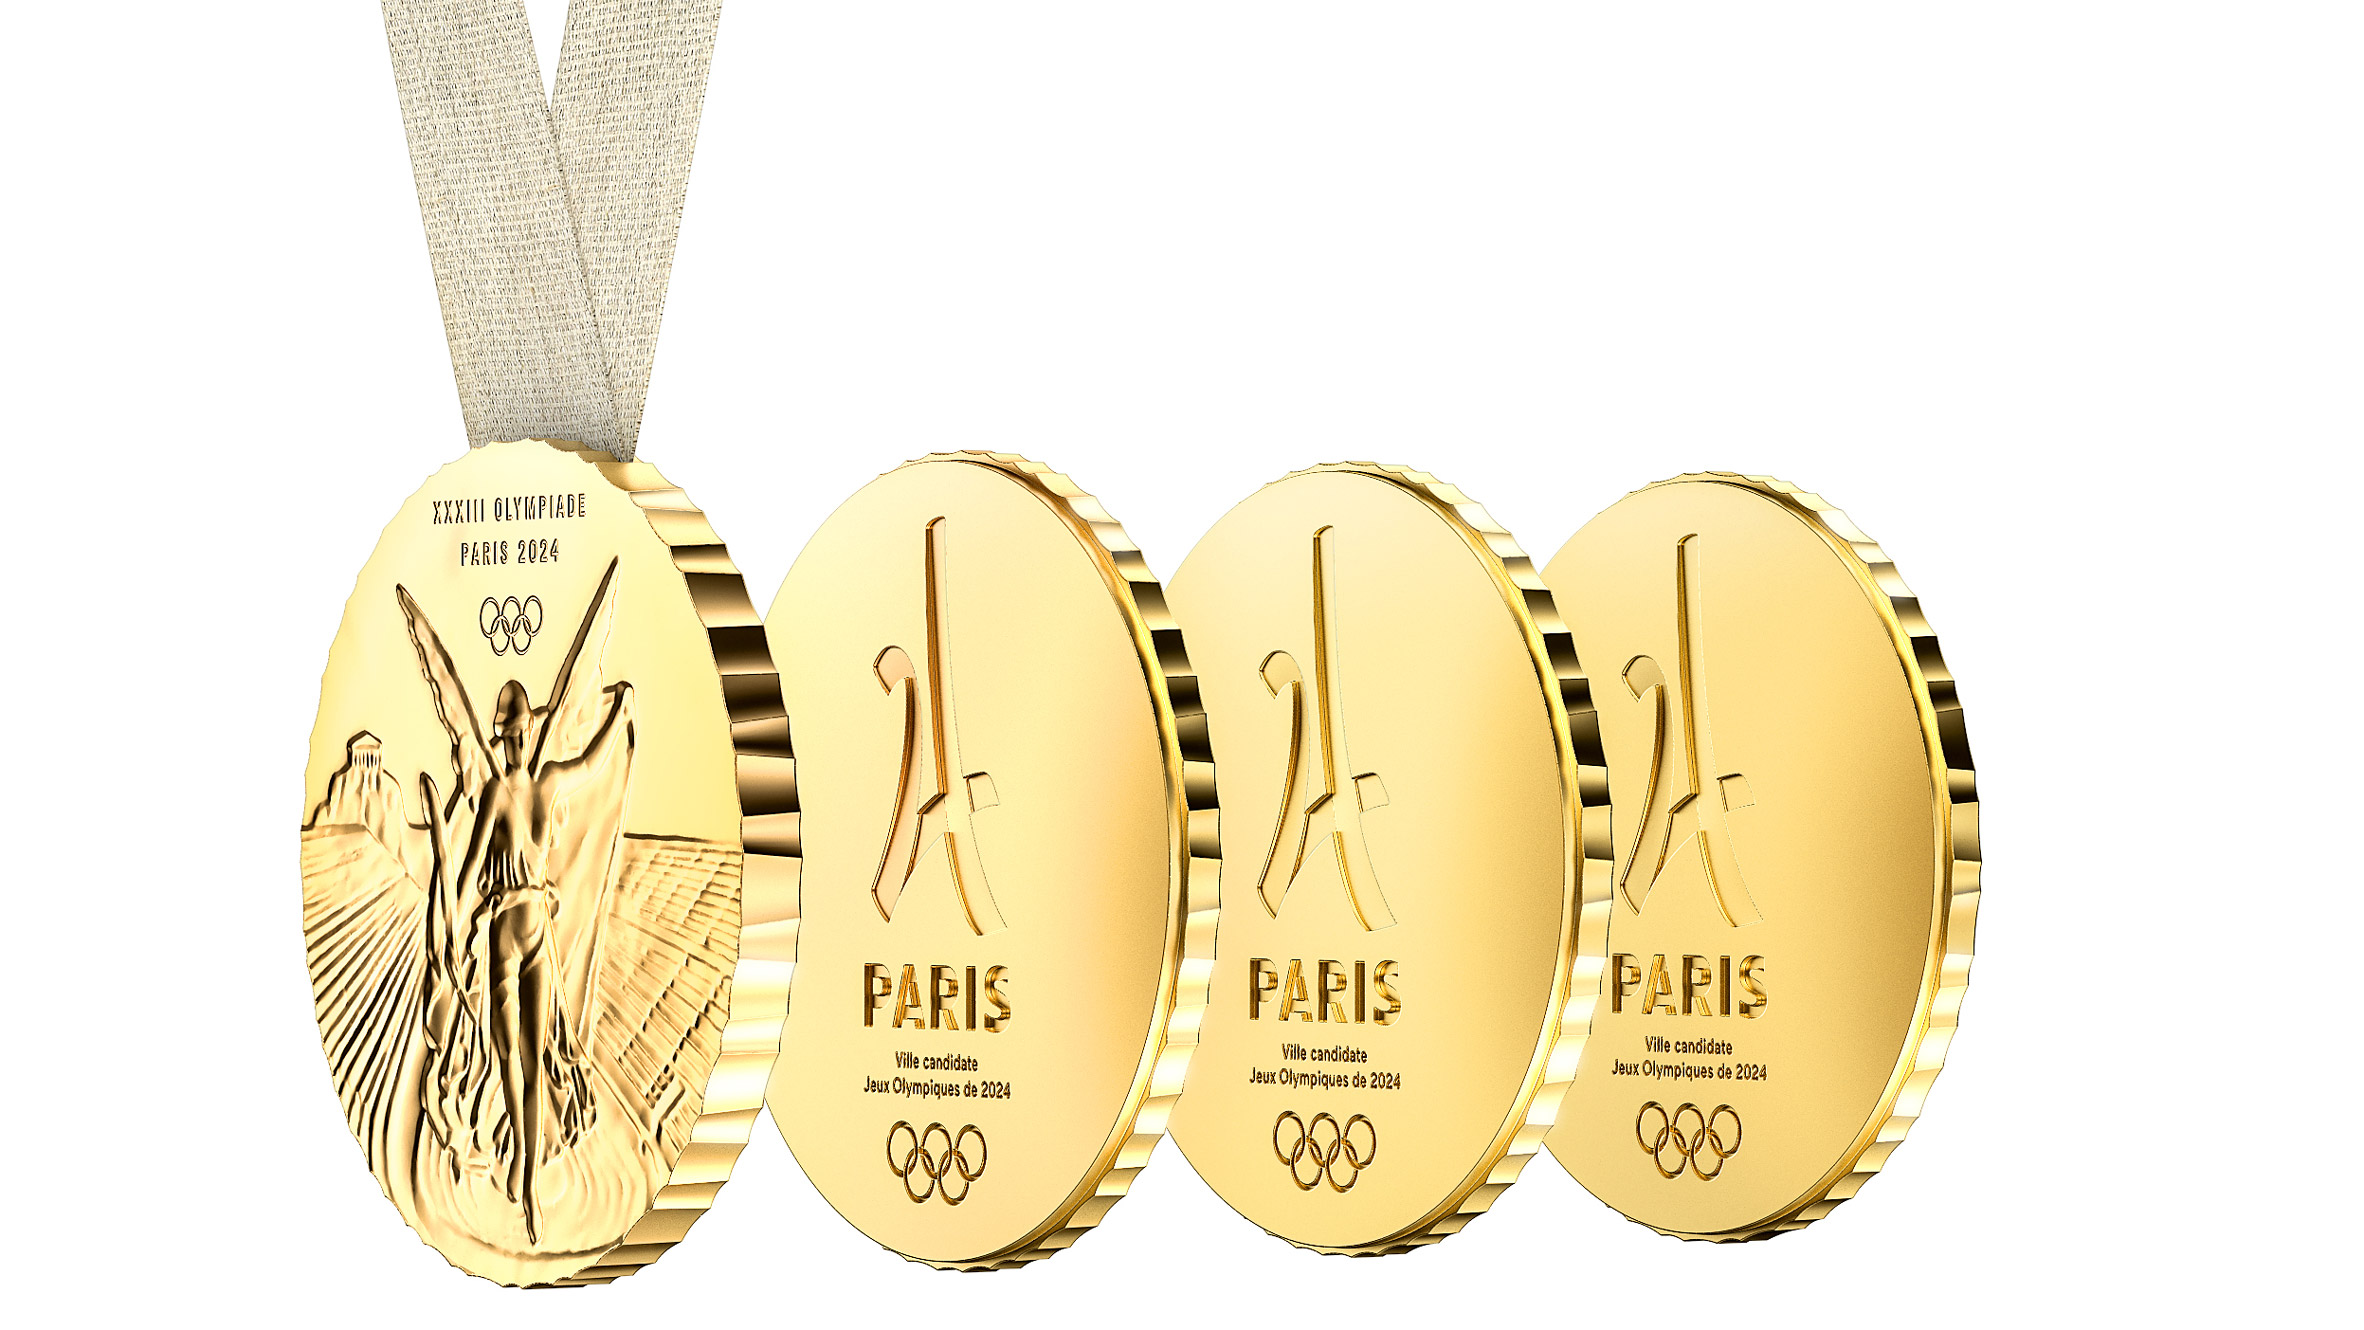 Philippe Starck's Paris 2024 Olympic medals design | KreedOn